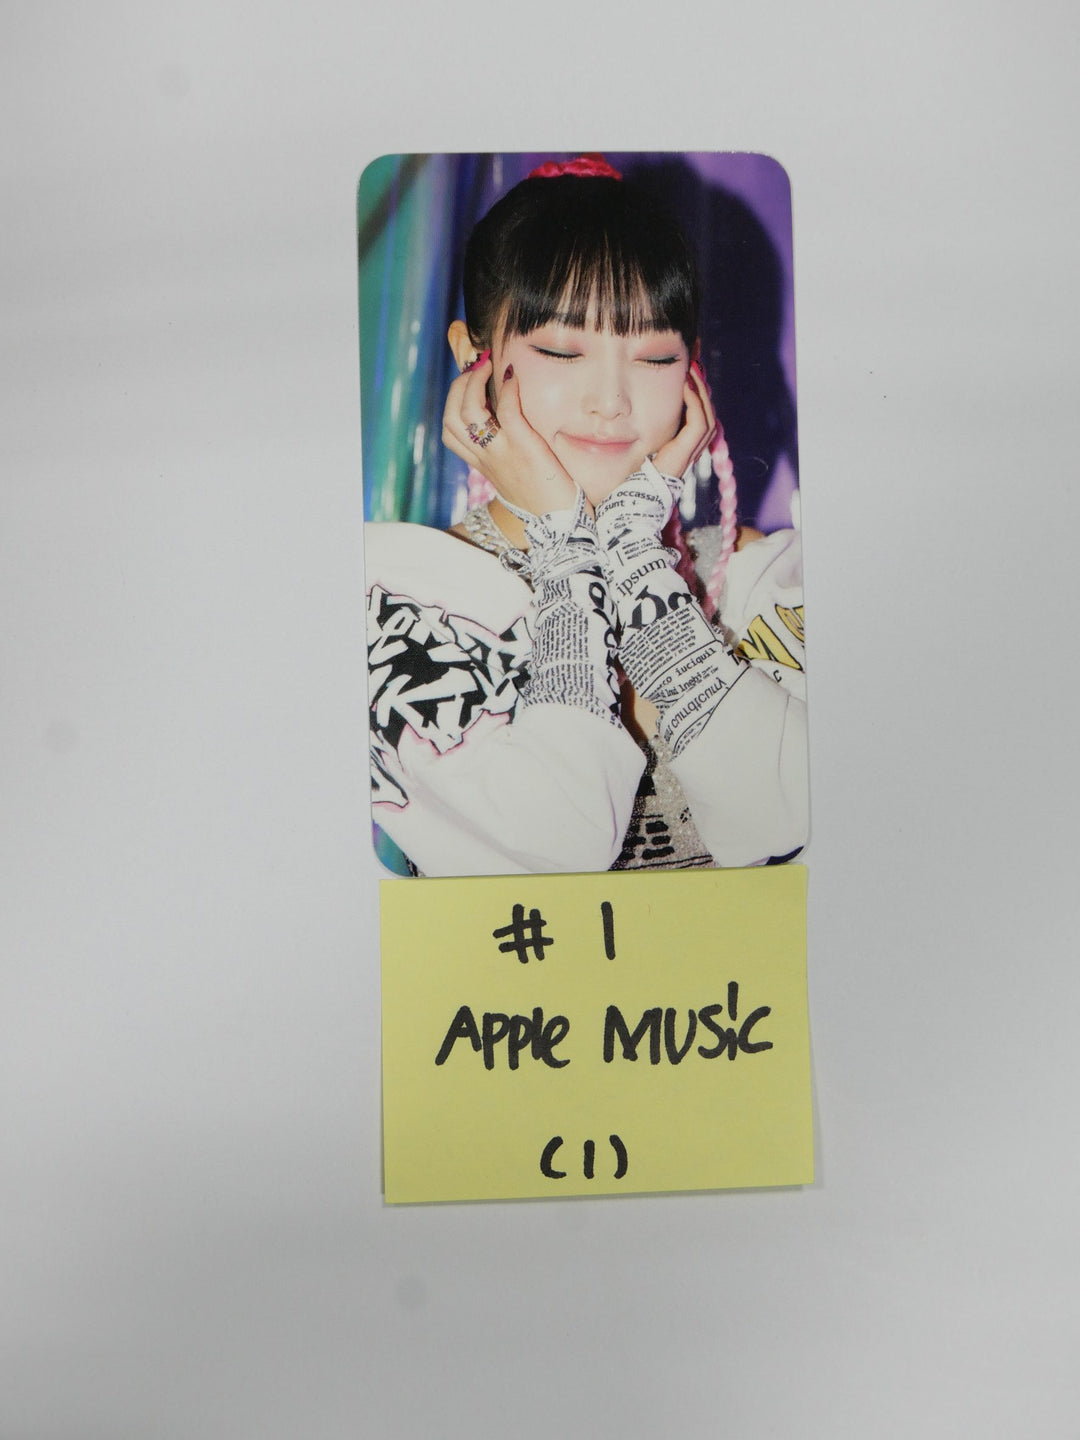 YENA "ˣ‿ˣ (SMiLEY)" - Apple Music Pre-Order Benefit Phtocard